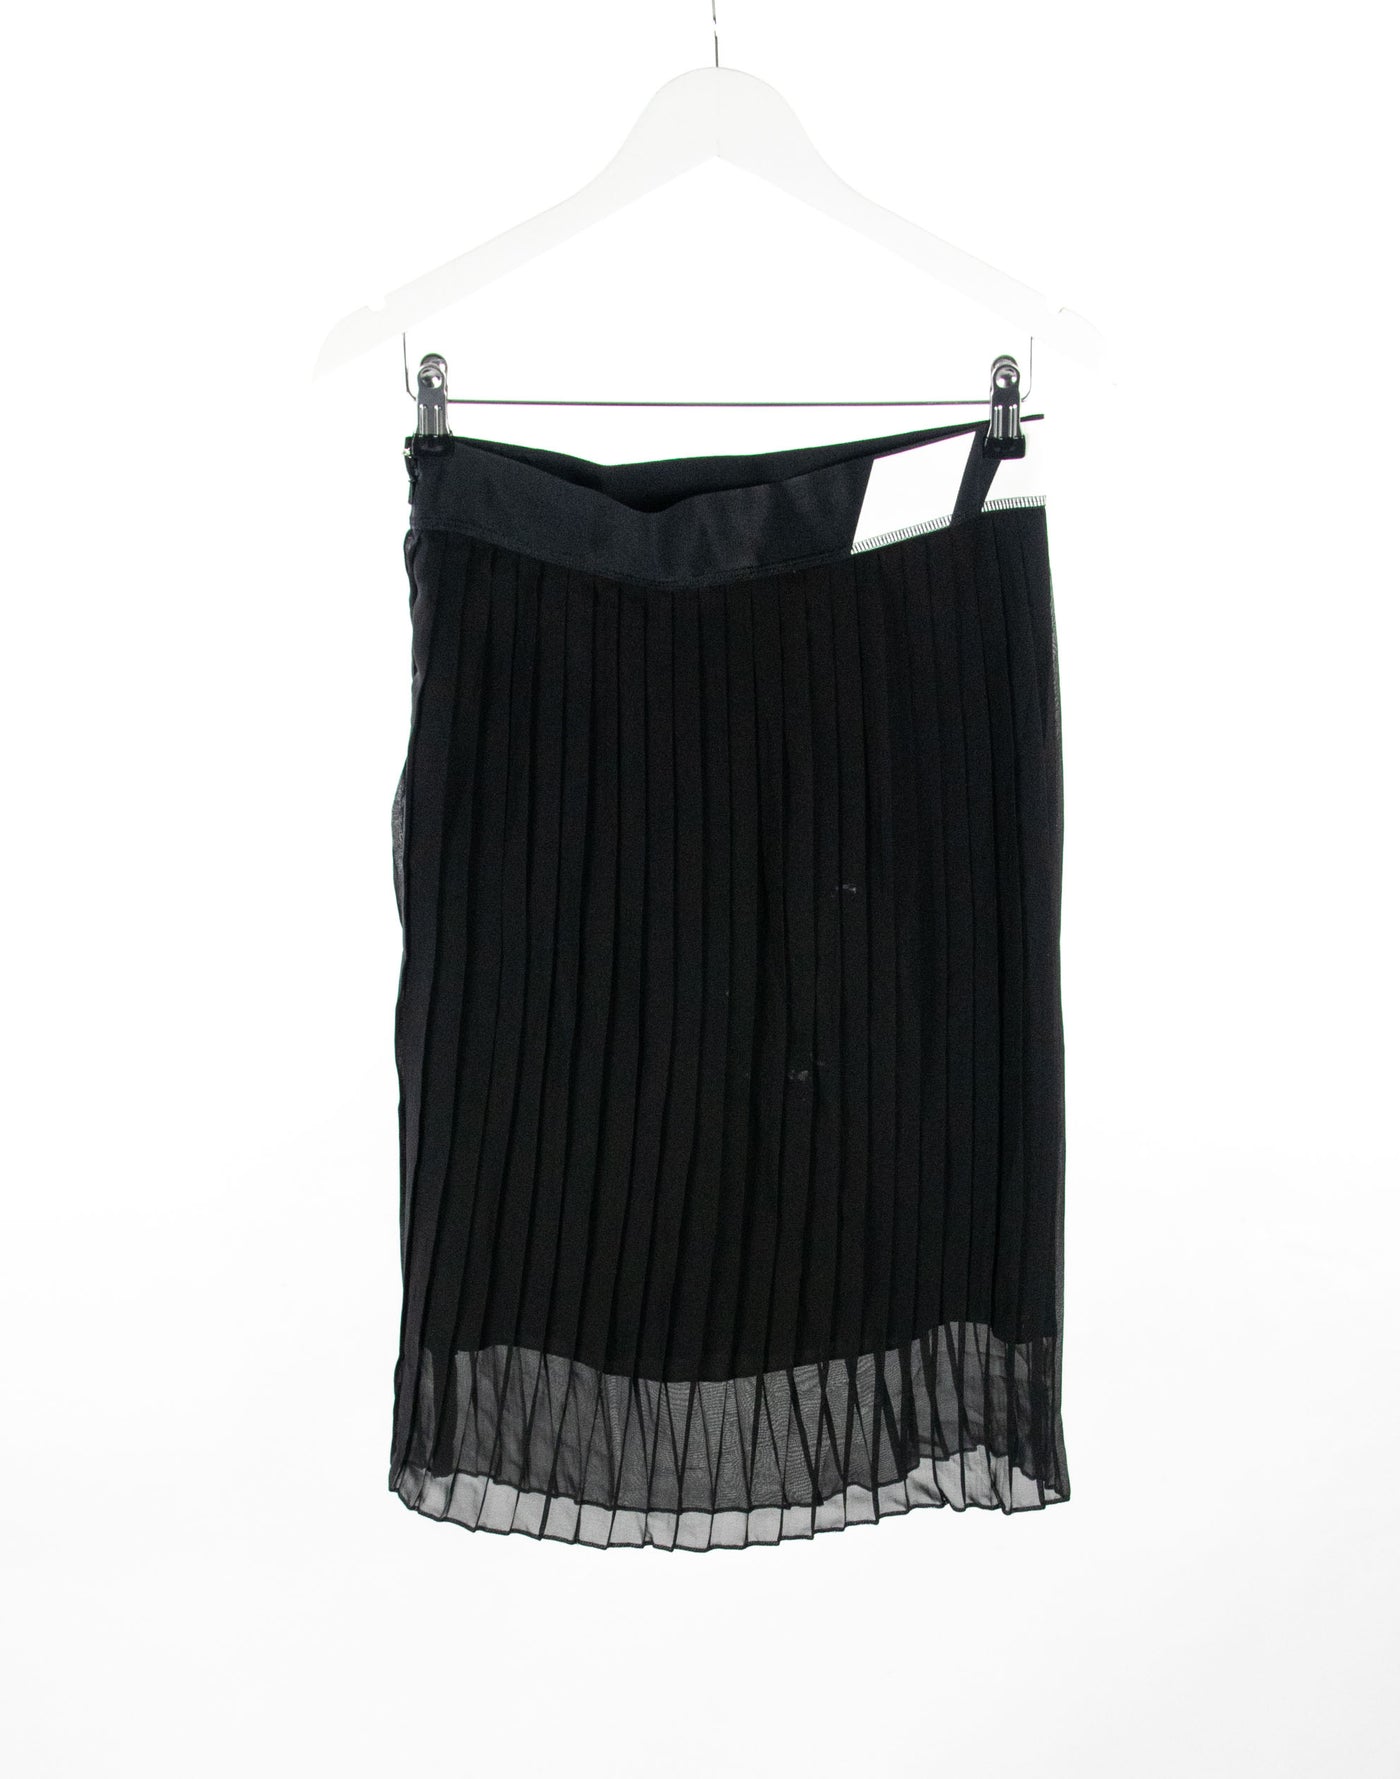 Falda negra plisada Adidas (NUEVO)